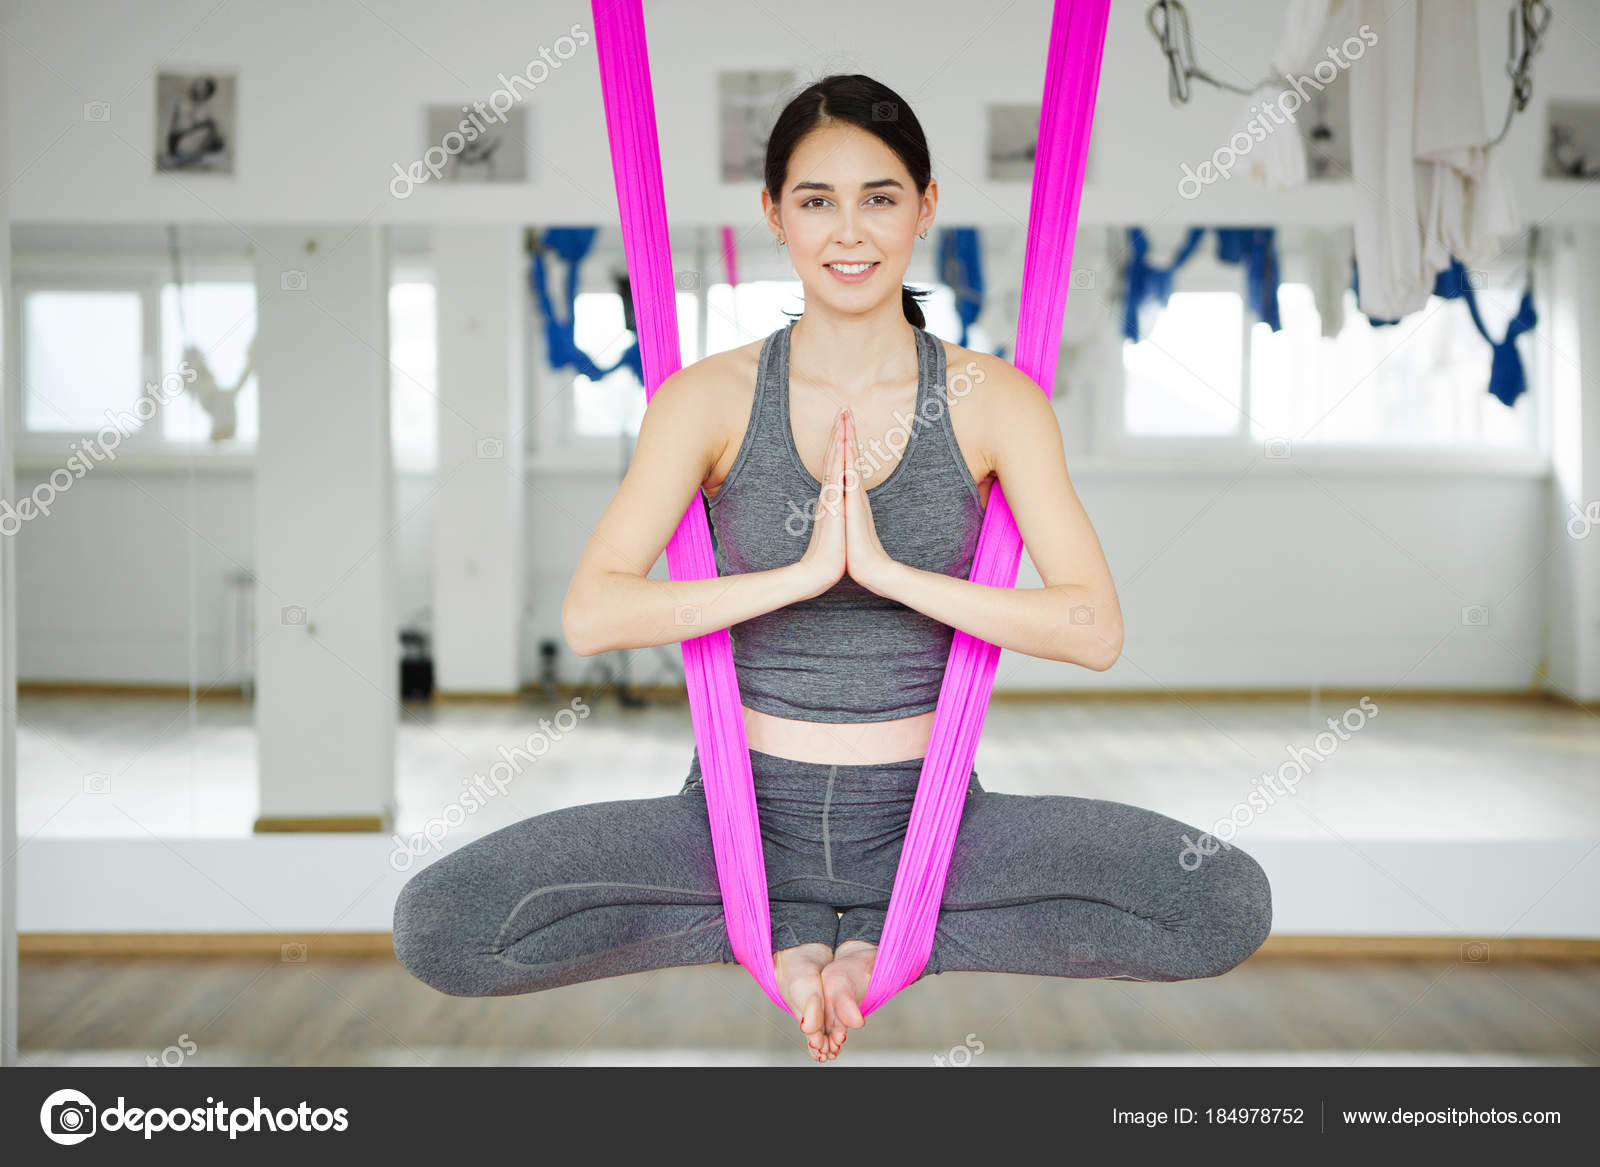 Aerial Antigravity Yoga Girl In Lotus Pose On Silk Hammock Stock Photo Image By C Il21 184978752